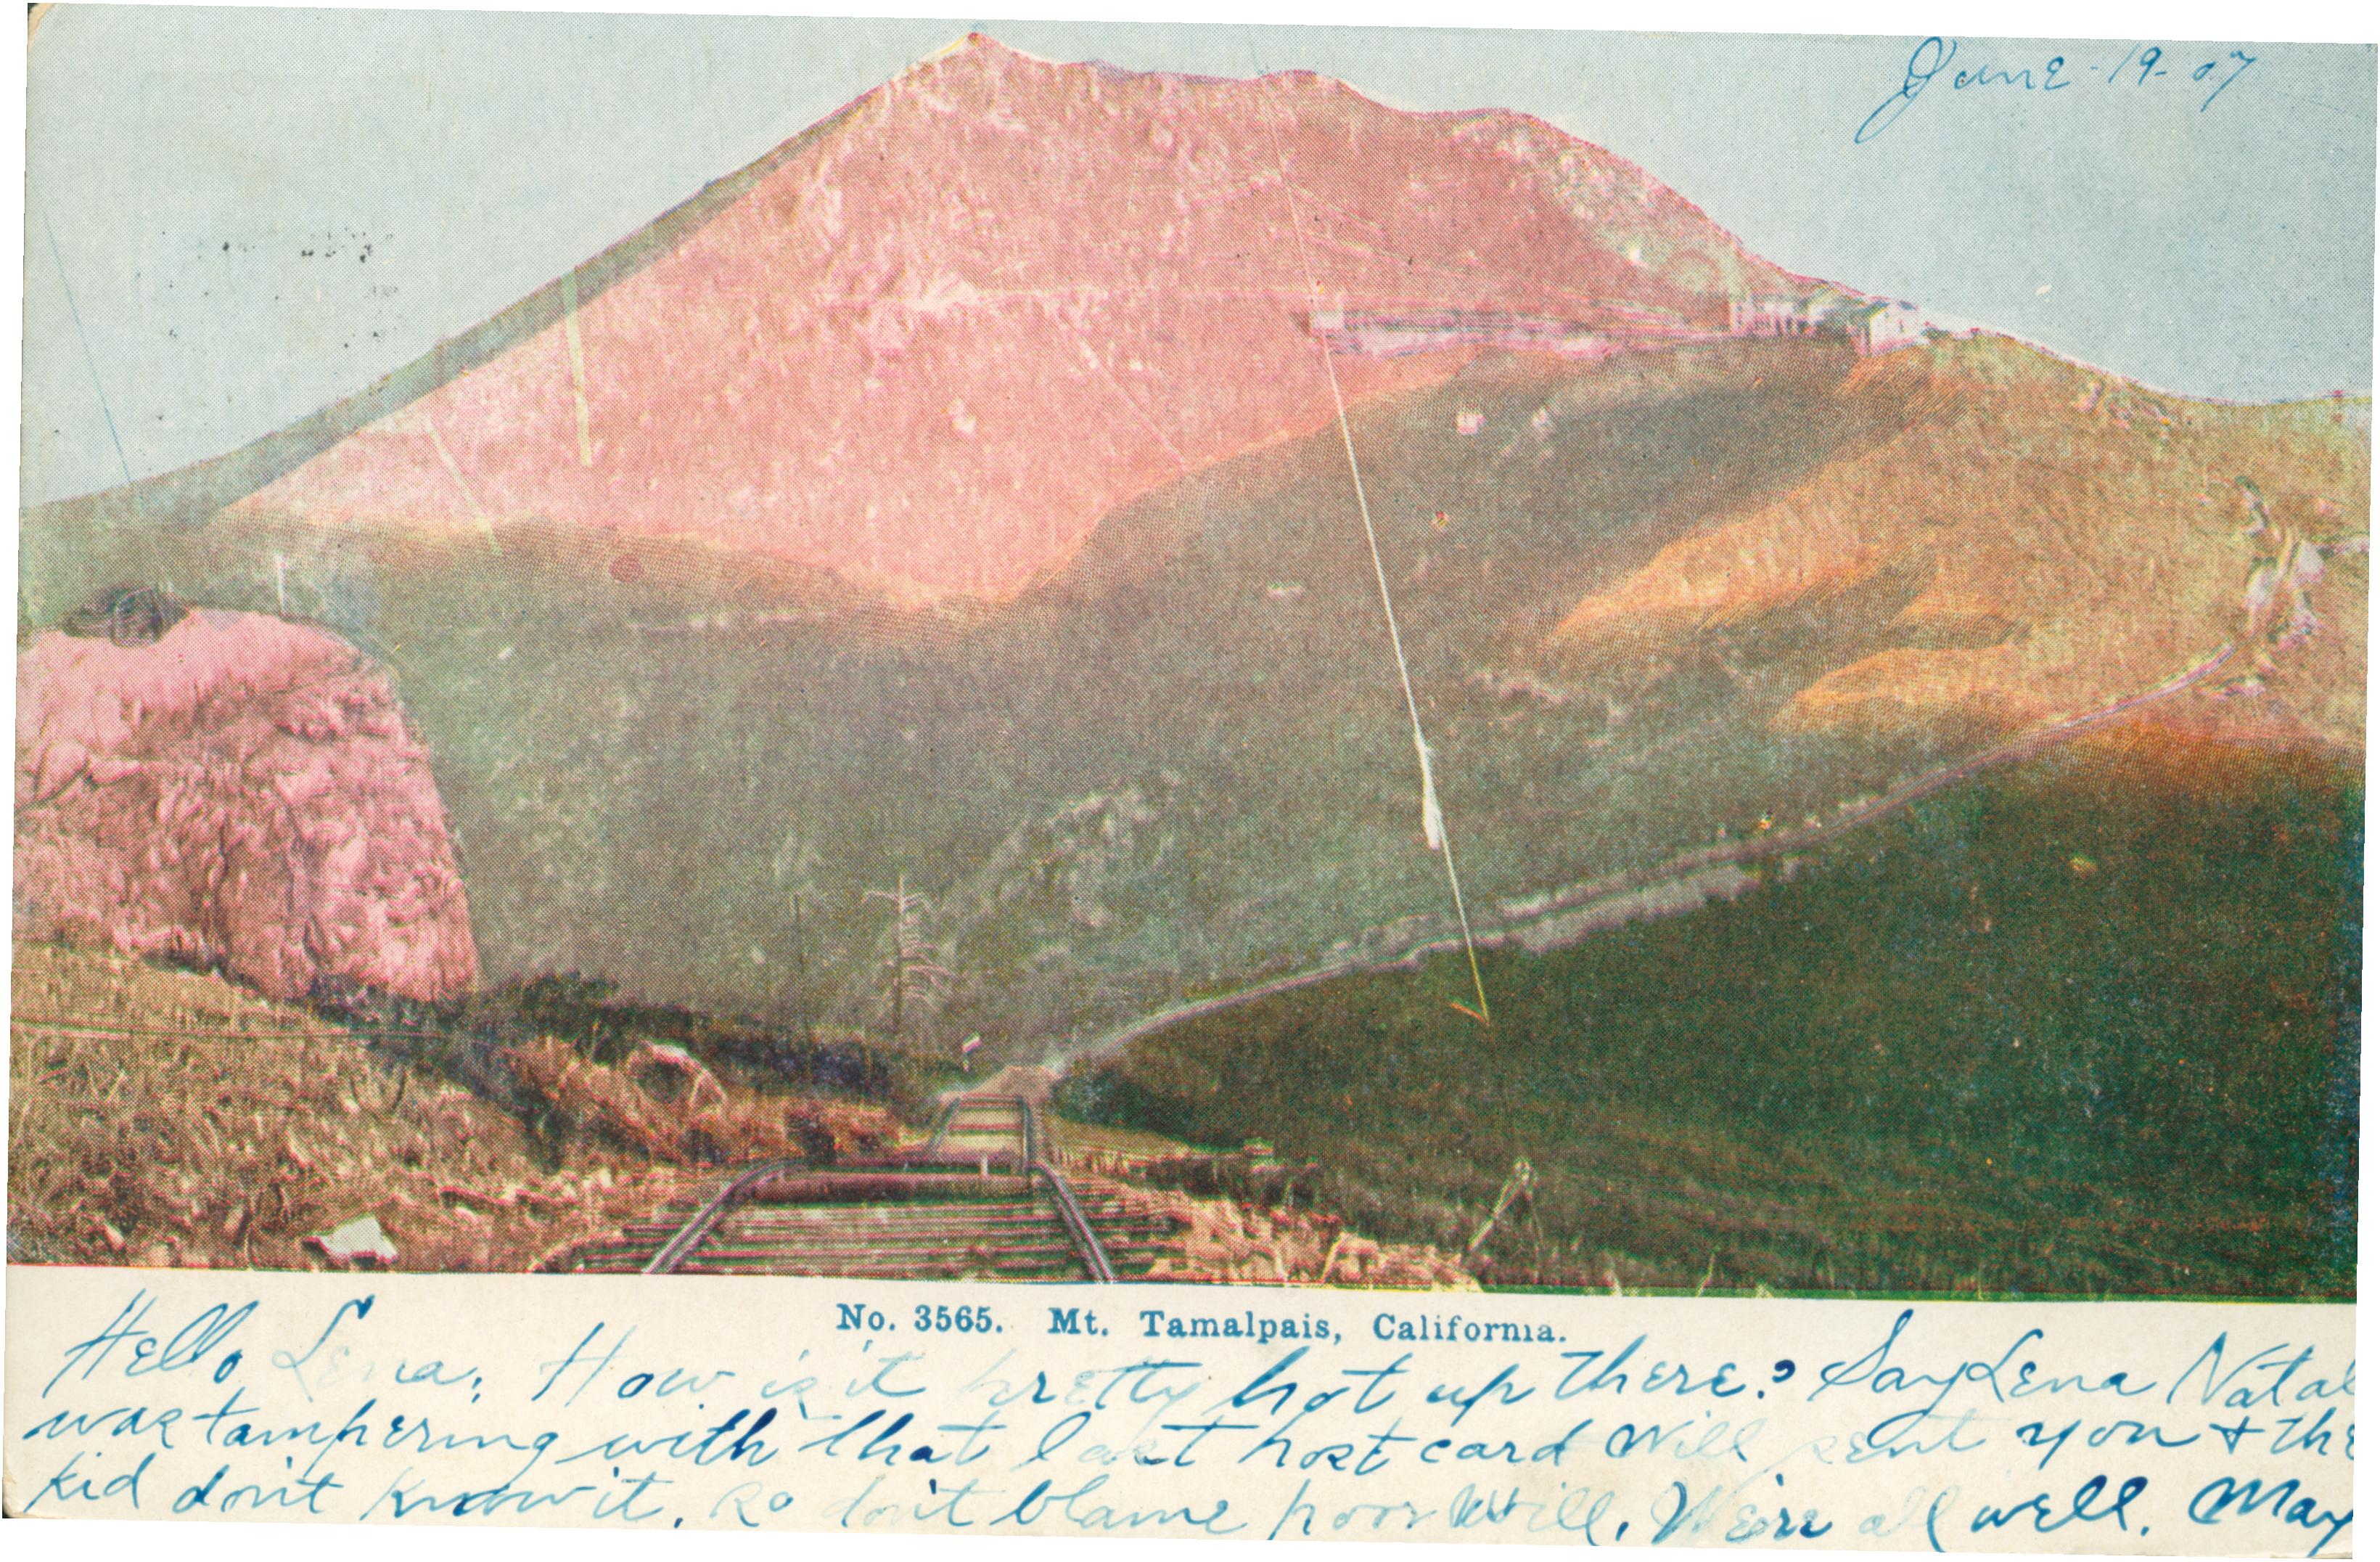 Railroad tracks leading up the mountainside of Mt, Tamalpais, building near top of mountain